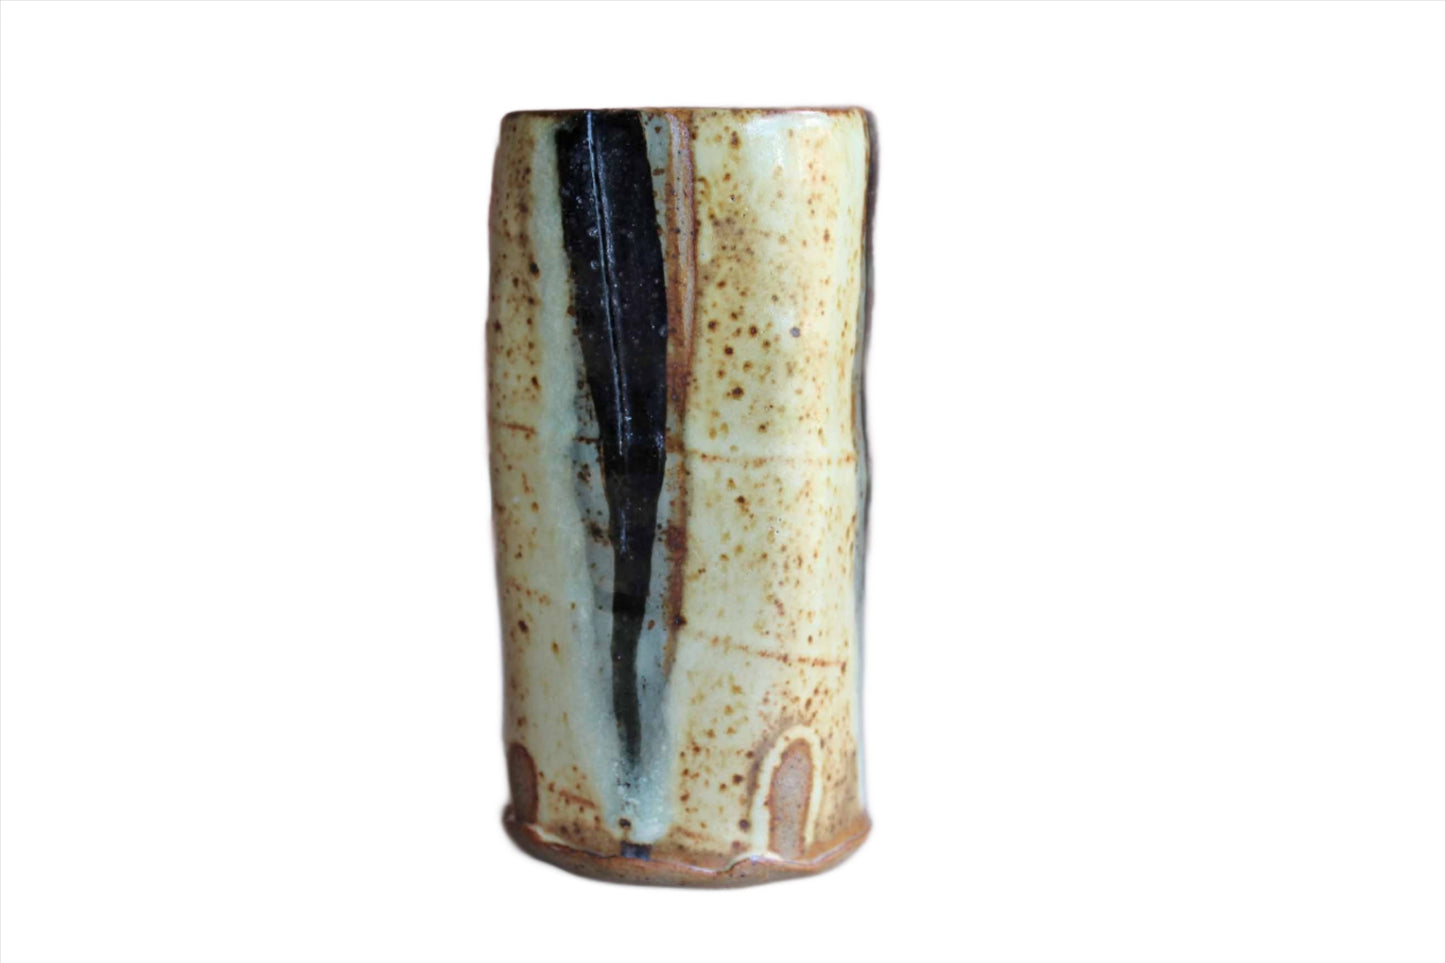 Handmade Ceramic Storage Vessel or Vase with Black, Gray and Yellow Glazing